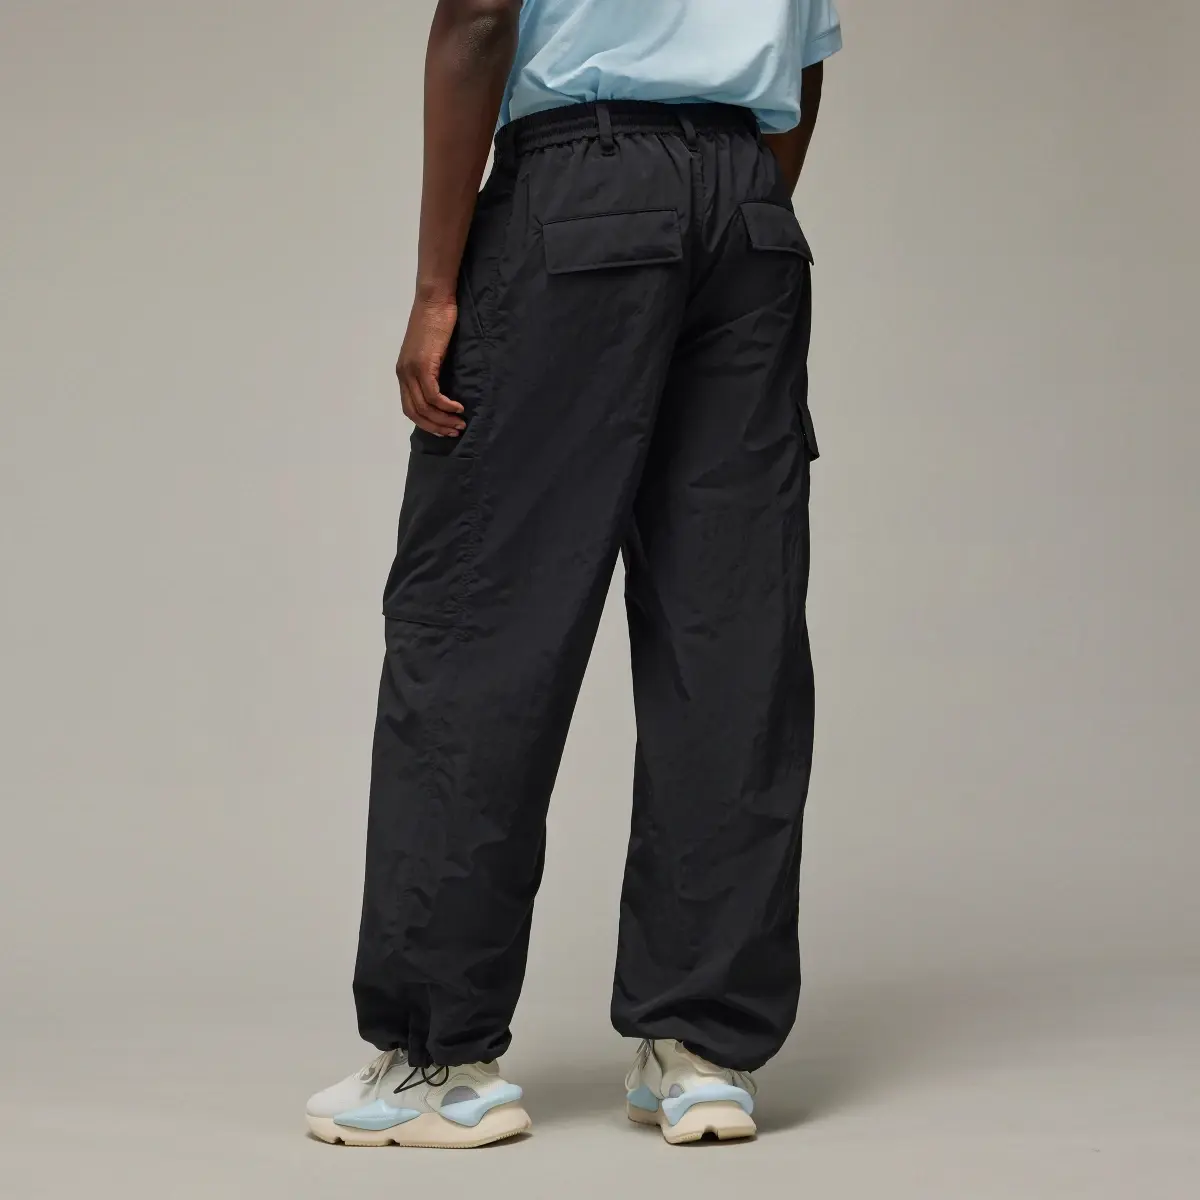 Adidas Y-3 Crinkle Nylon Pants. 3